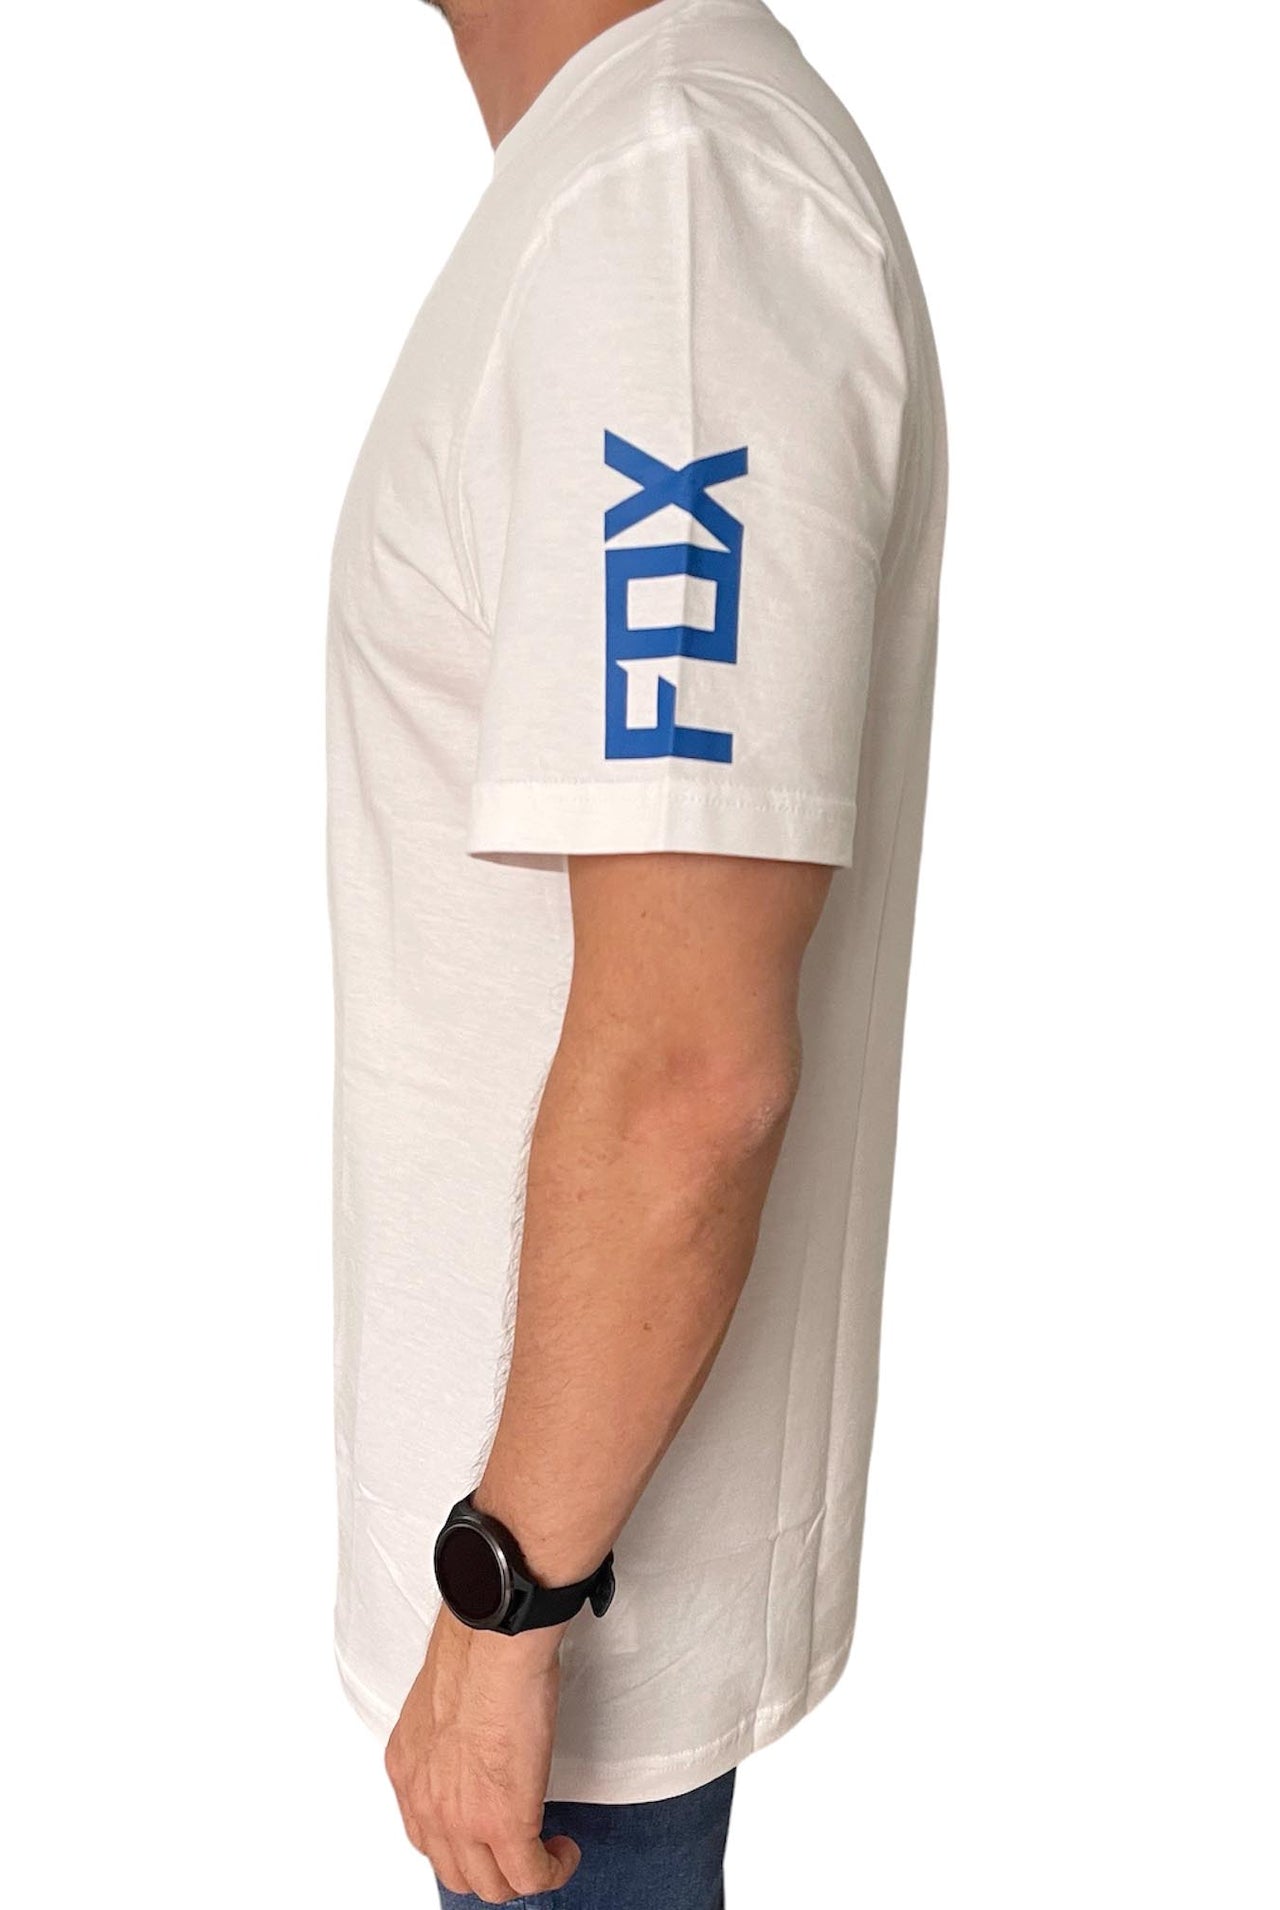 Camiseta Fox Perfil SS